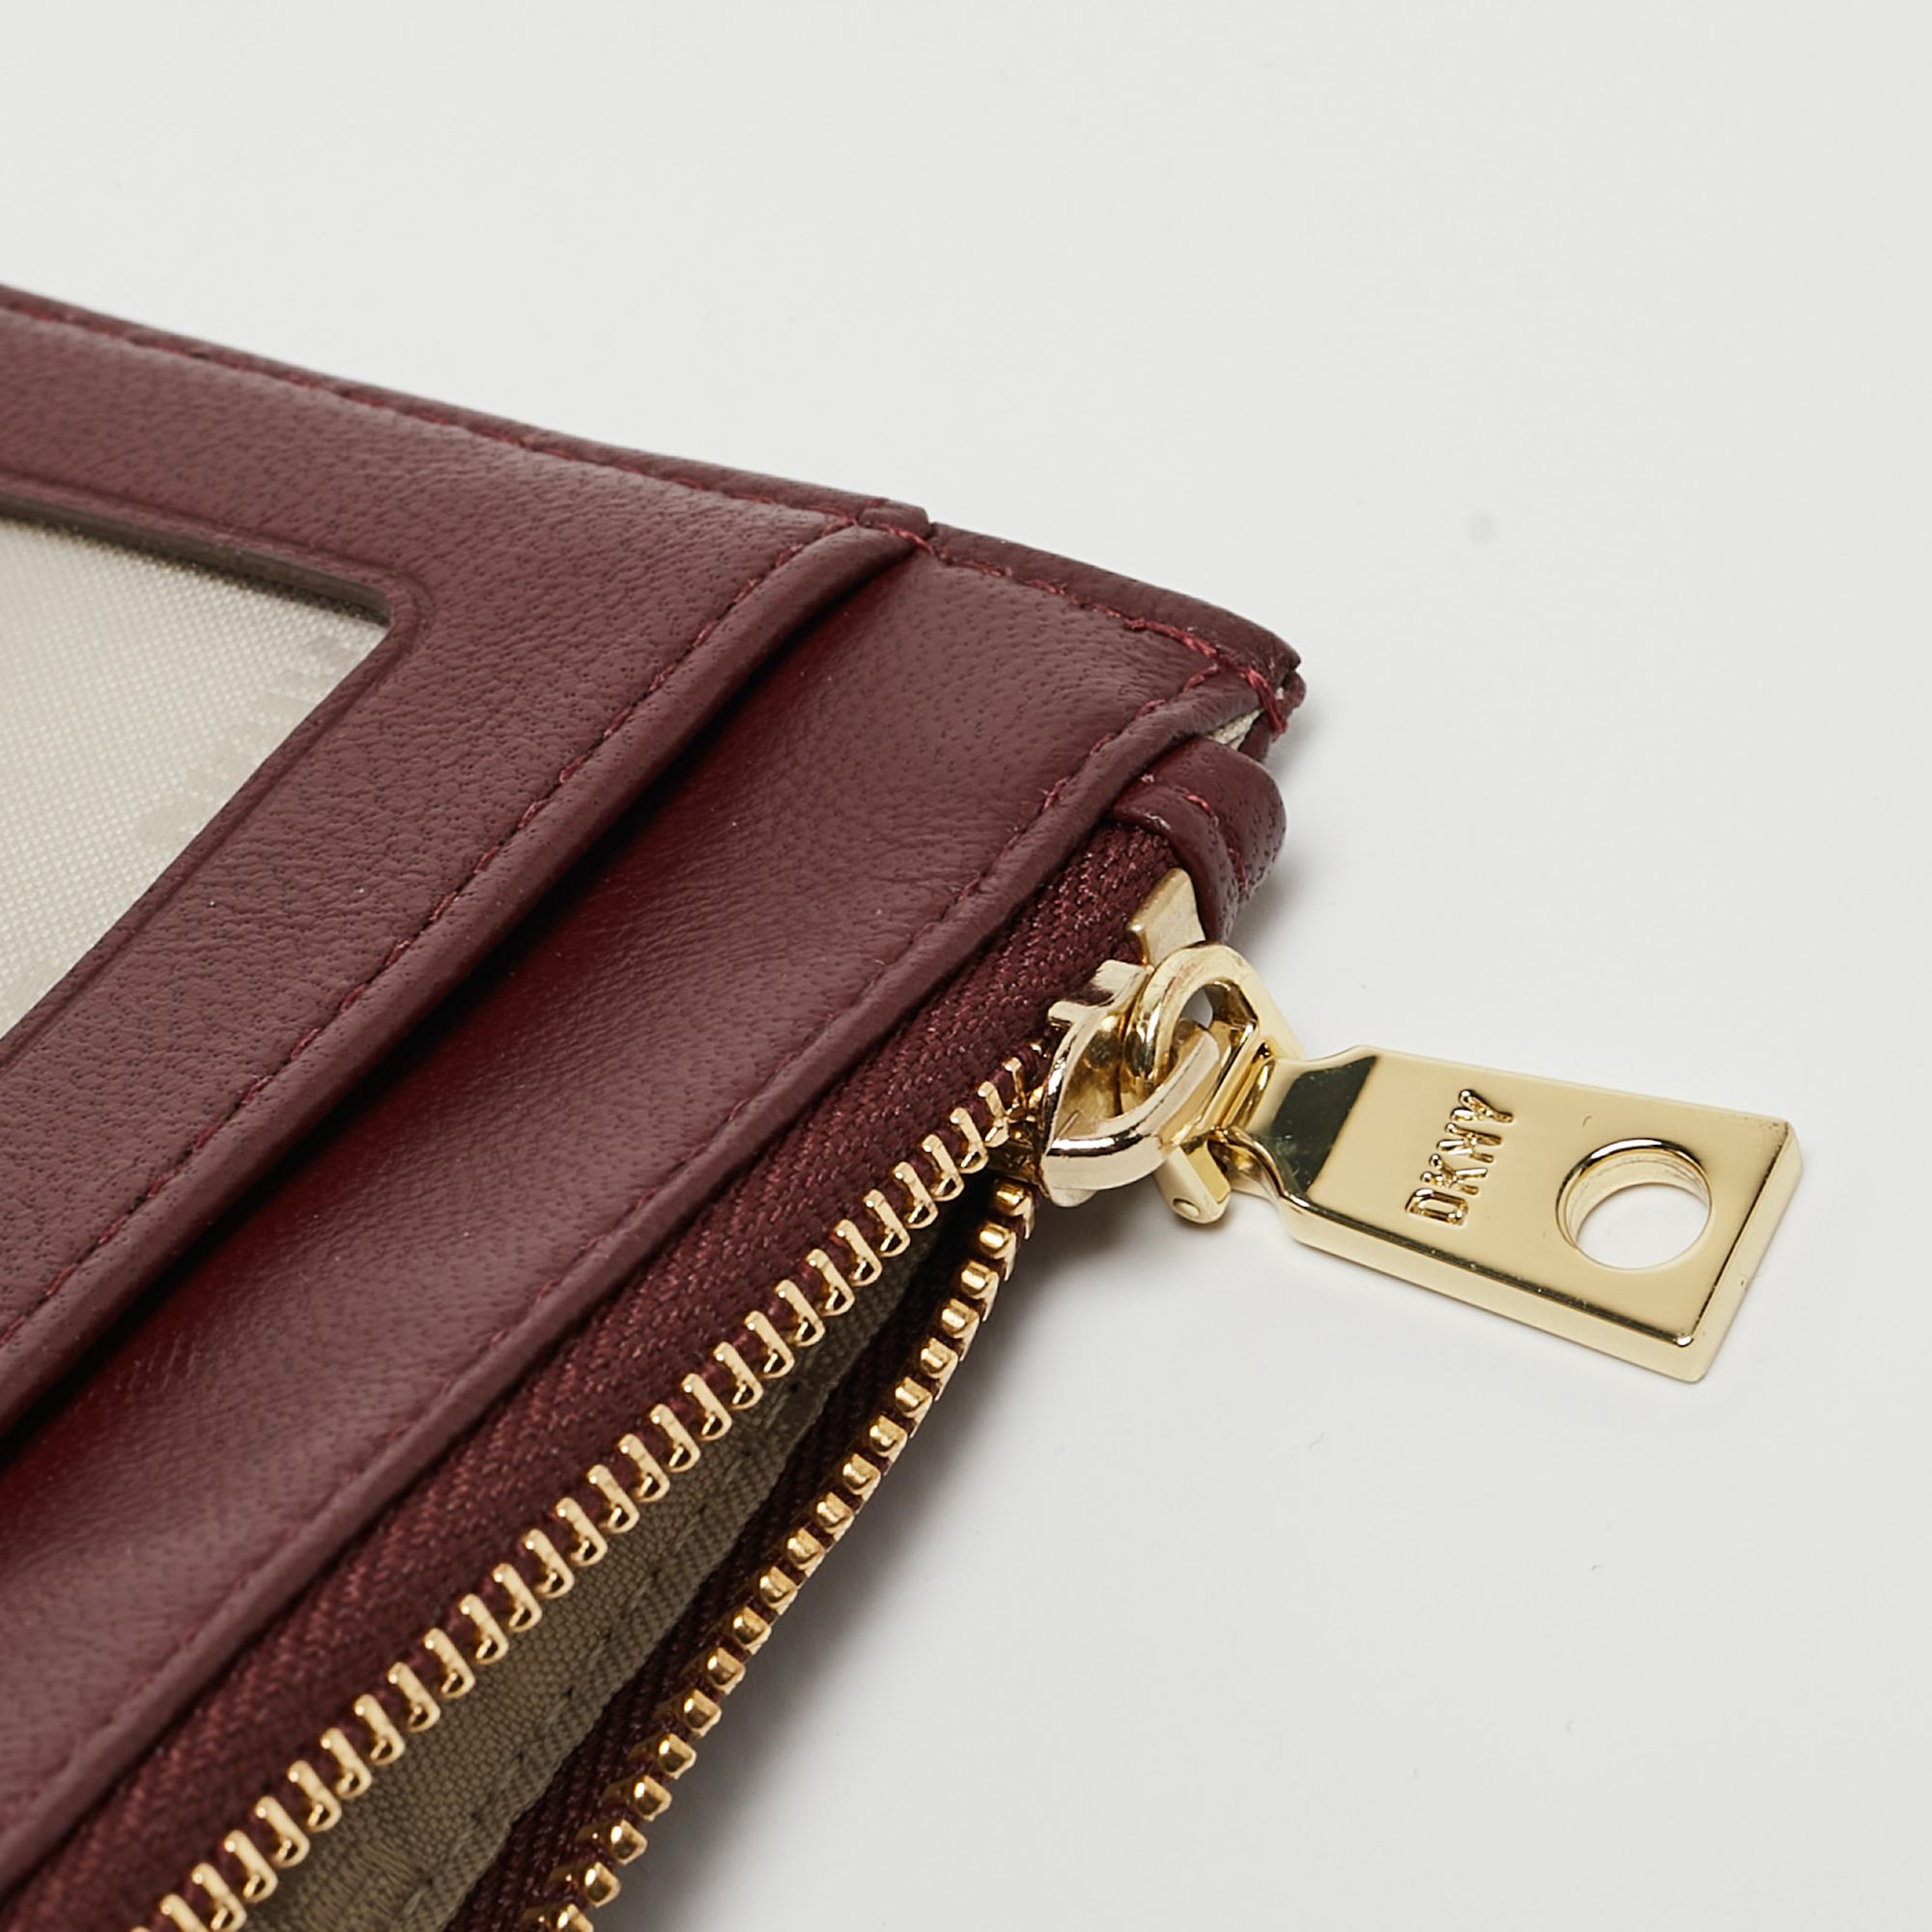 DKNY Burgundy Signature Embossed Leather Catherine Key Card Case